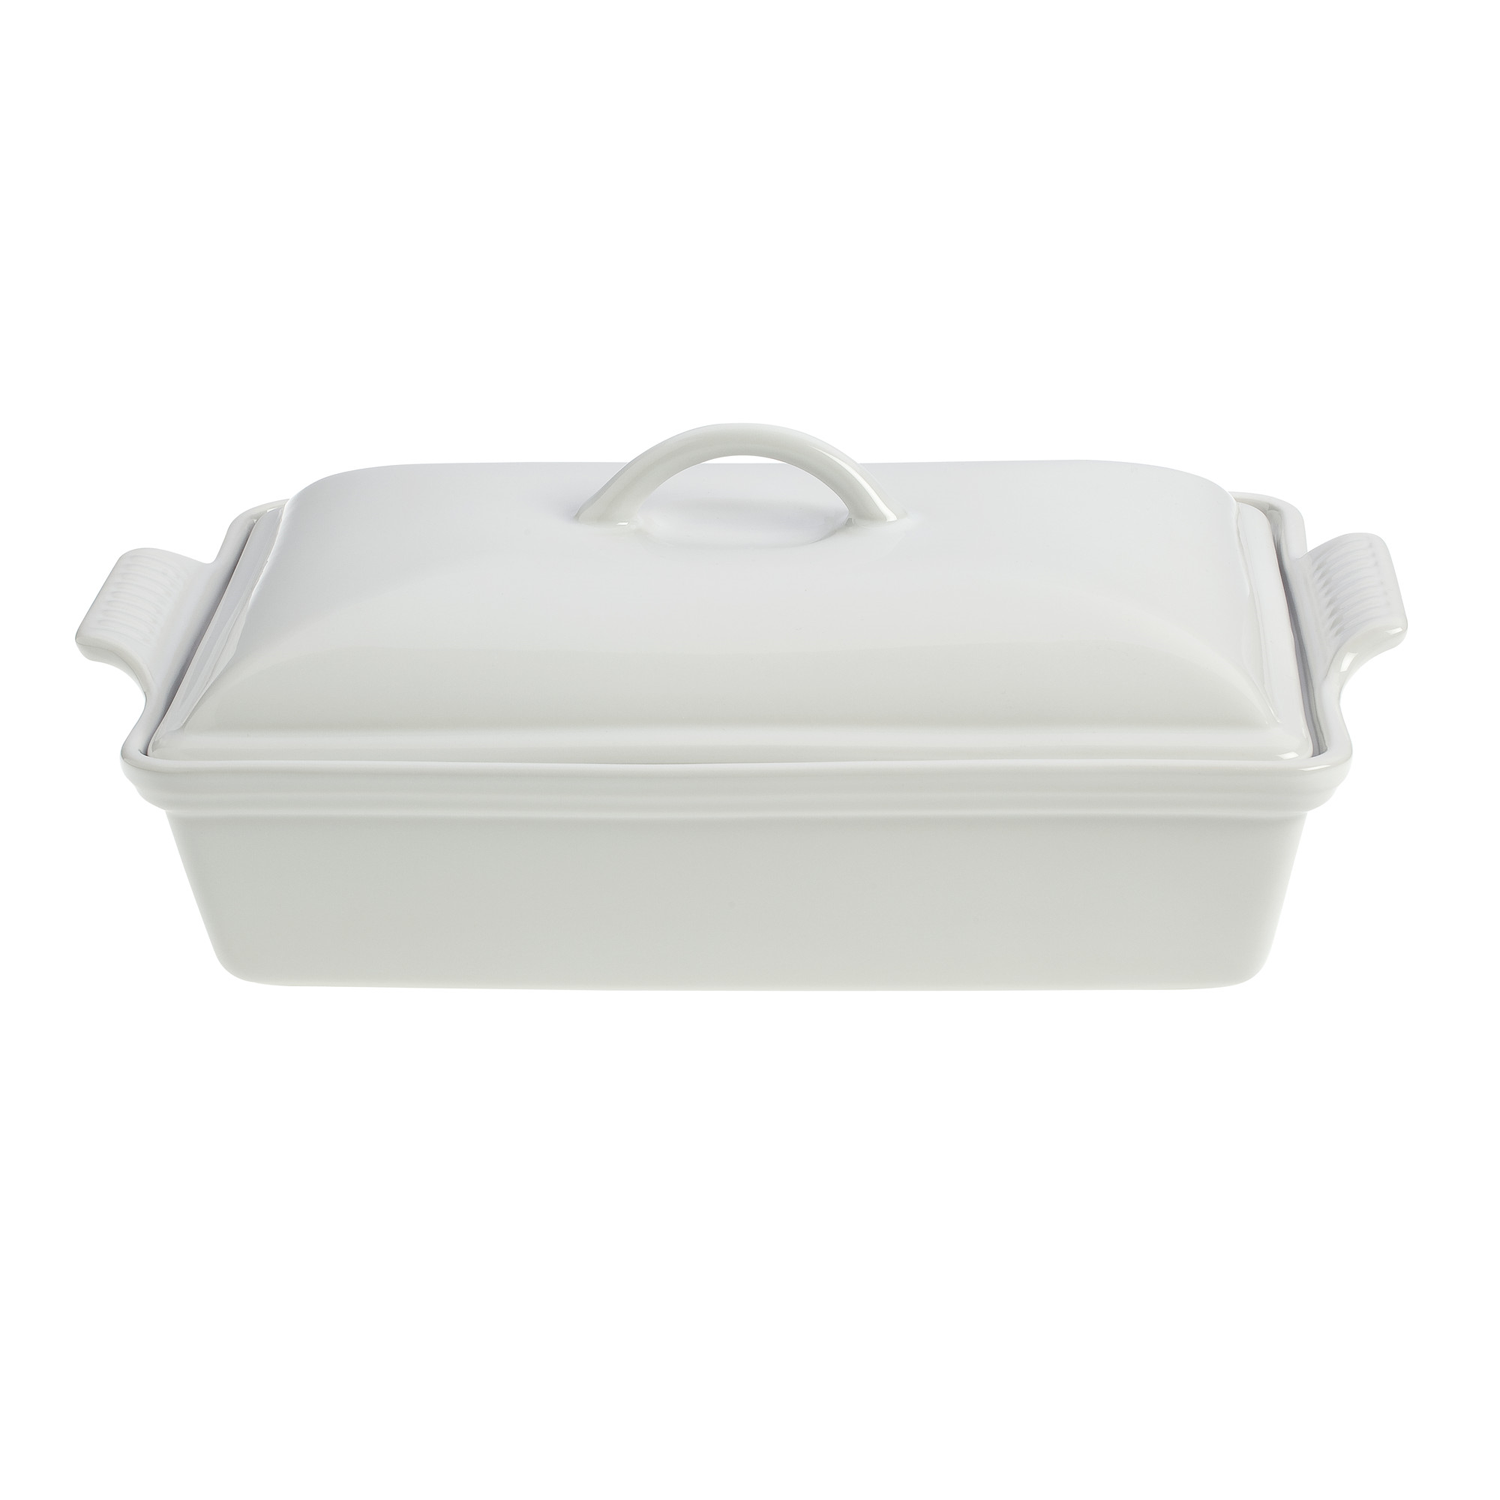 Le Creuset 2.5 Qt. Rectangular Heritage Baking Dish | Cotton White